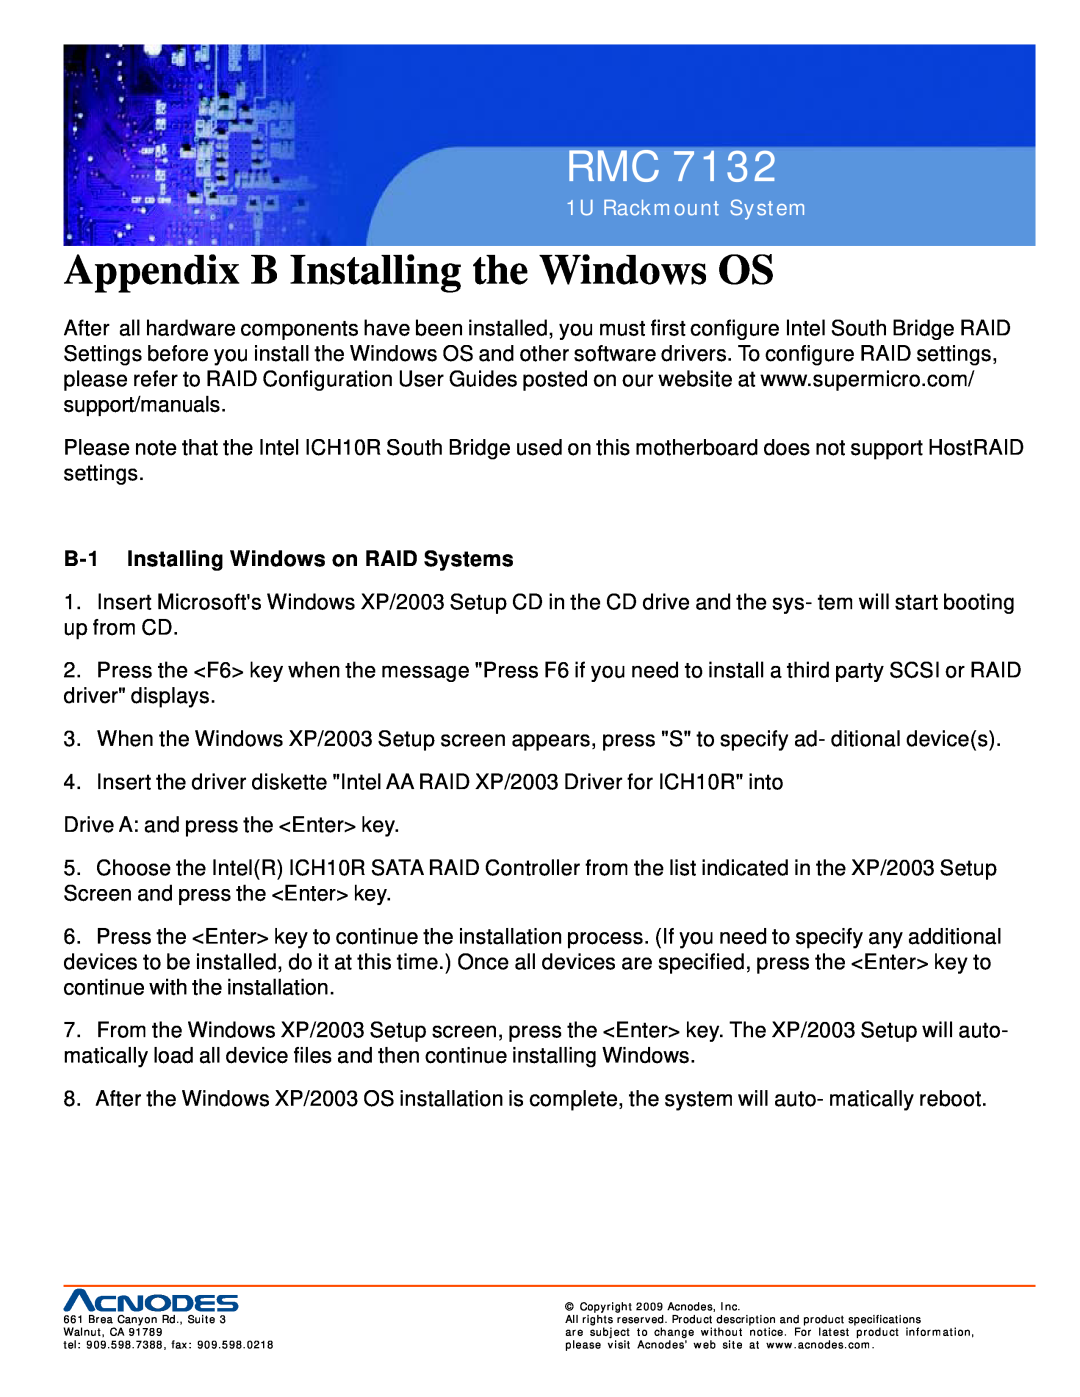 Acnodes RMC 7132 Appendix B Installing the Windows OS, B-1 Installing Windows on RAID Systems, 1U Rackmount System 